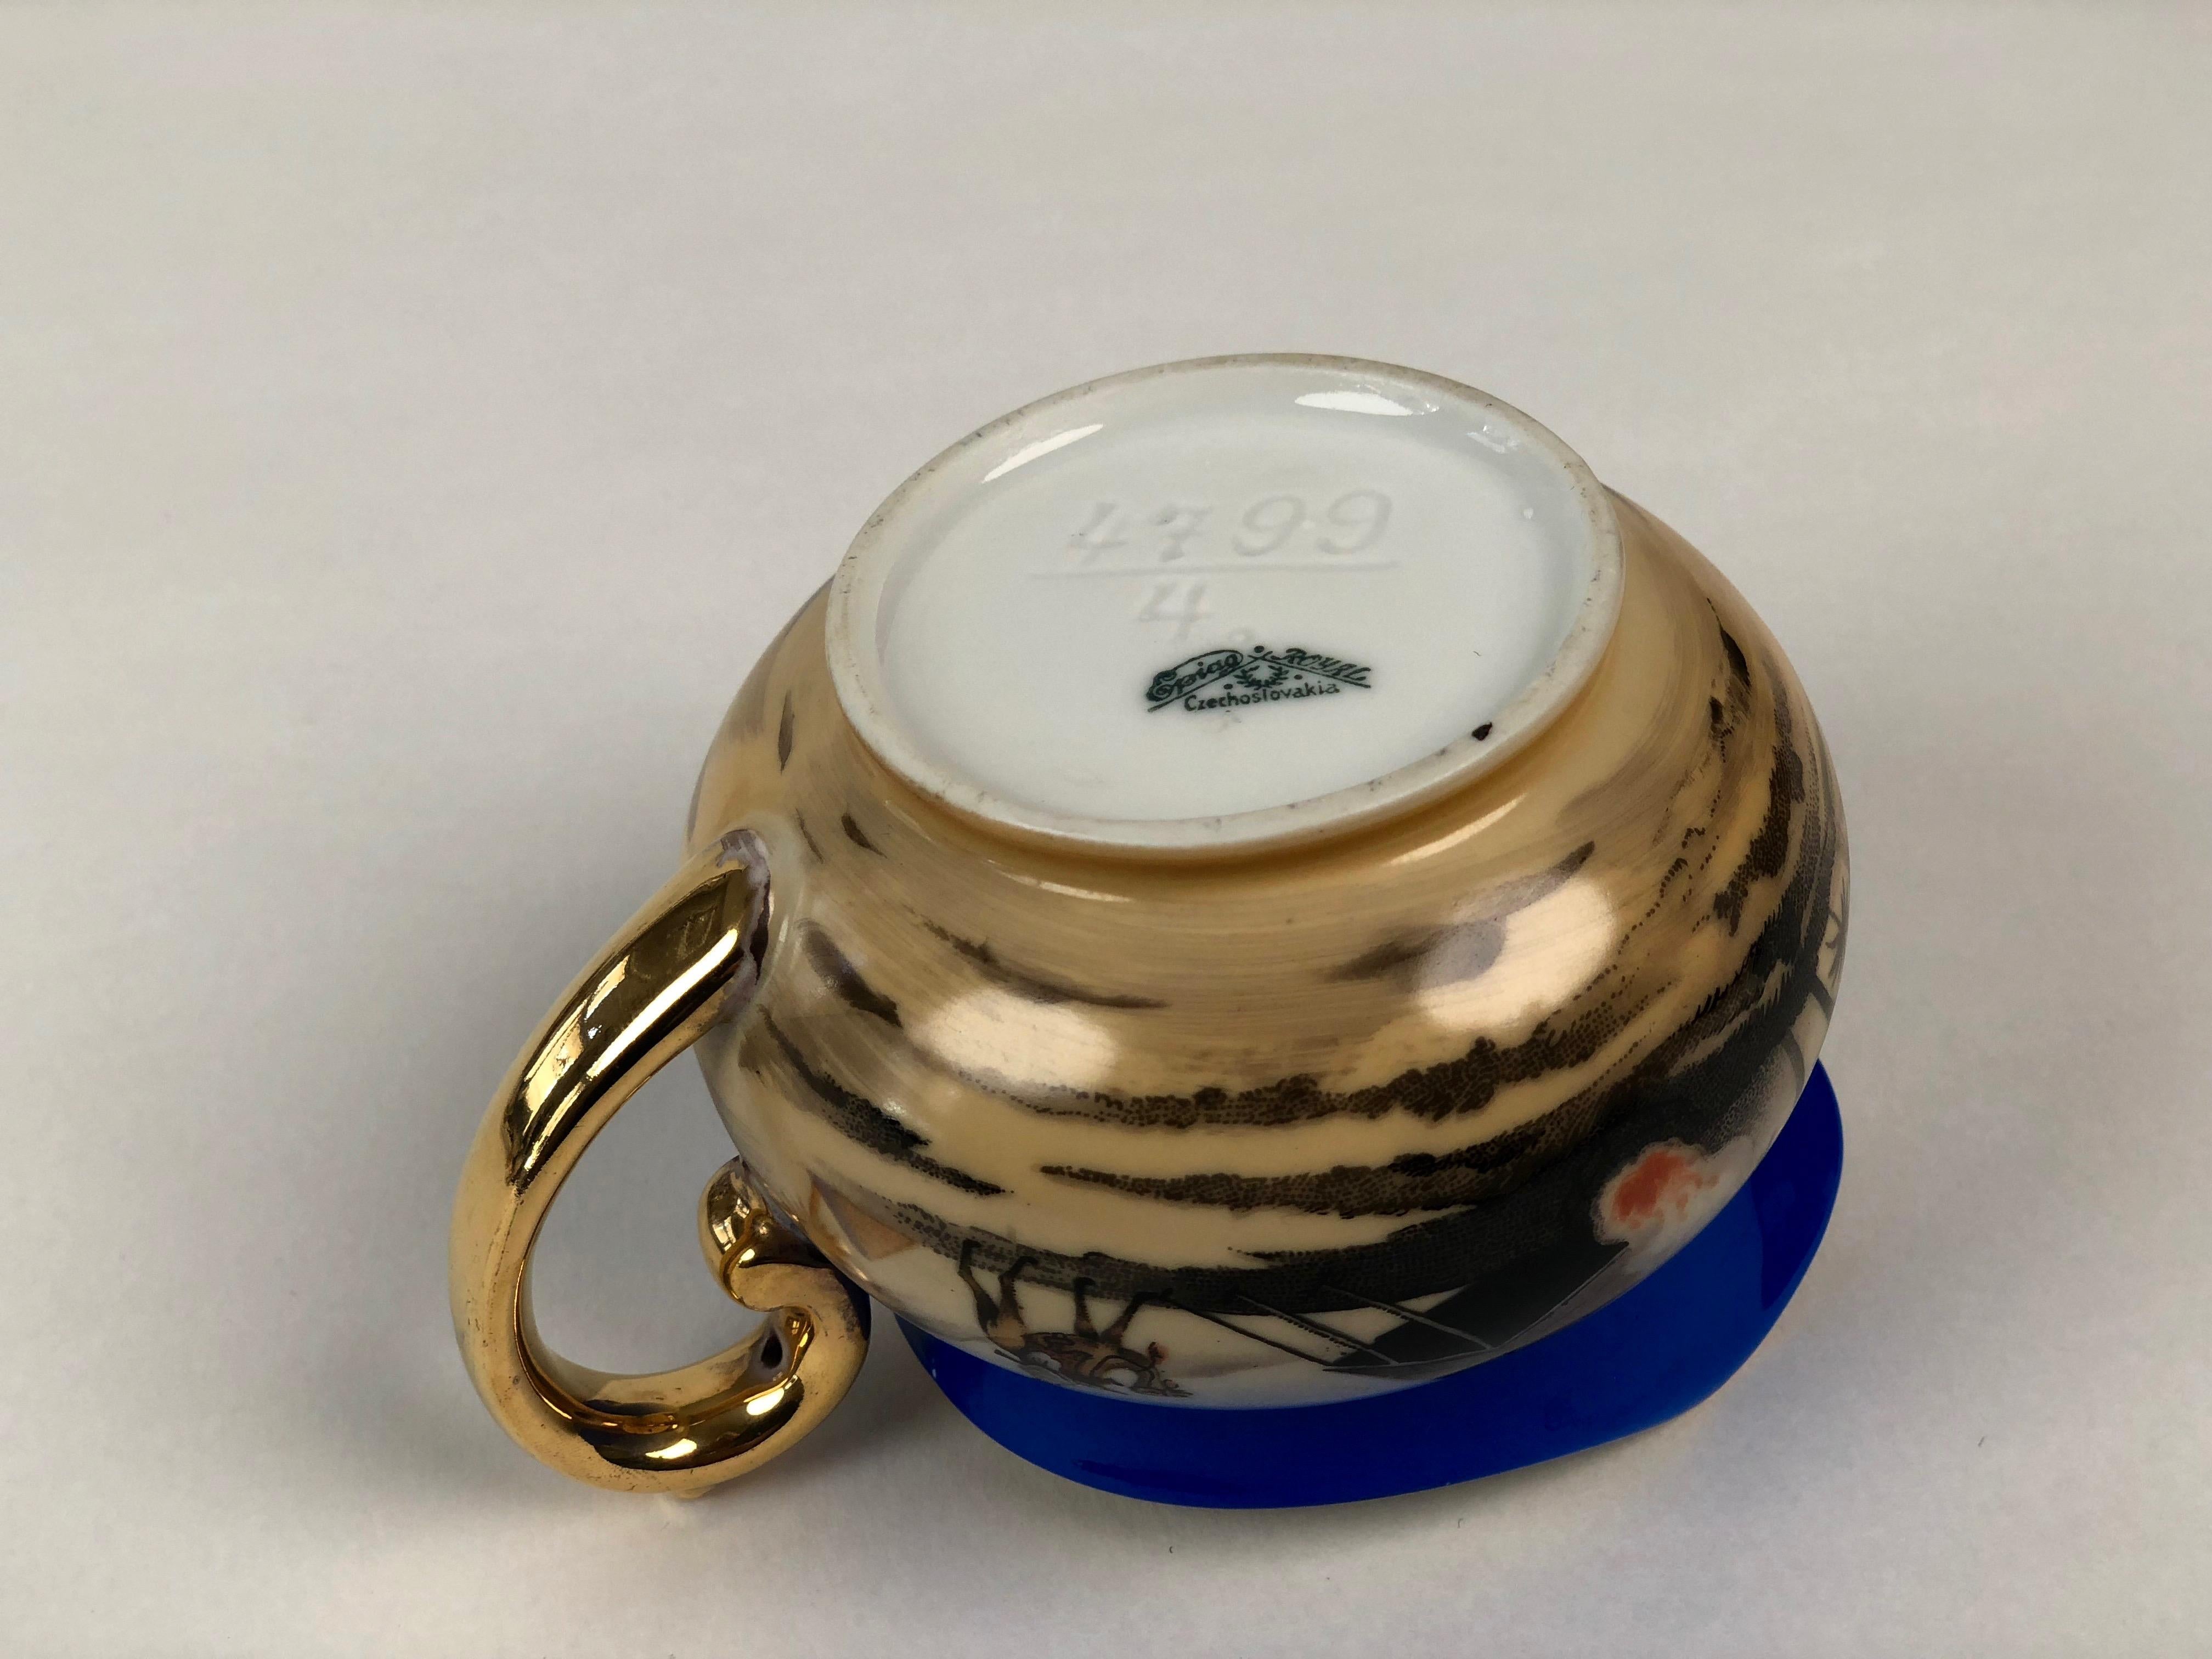 Porcelain Tea Set, Model Sahara from 1920s, in Cabana Style For Sale 7